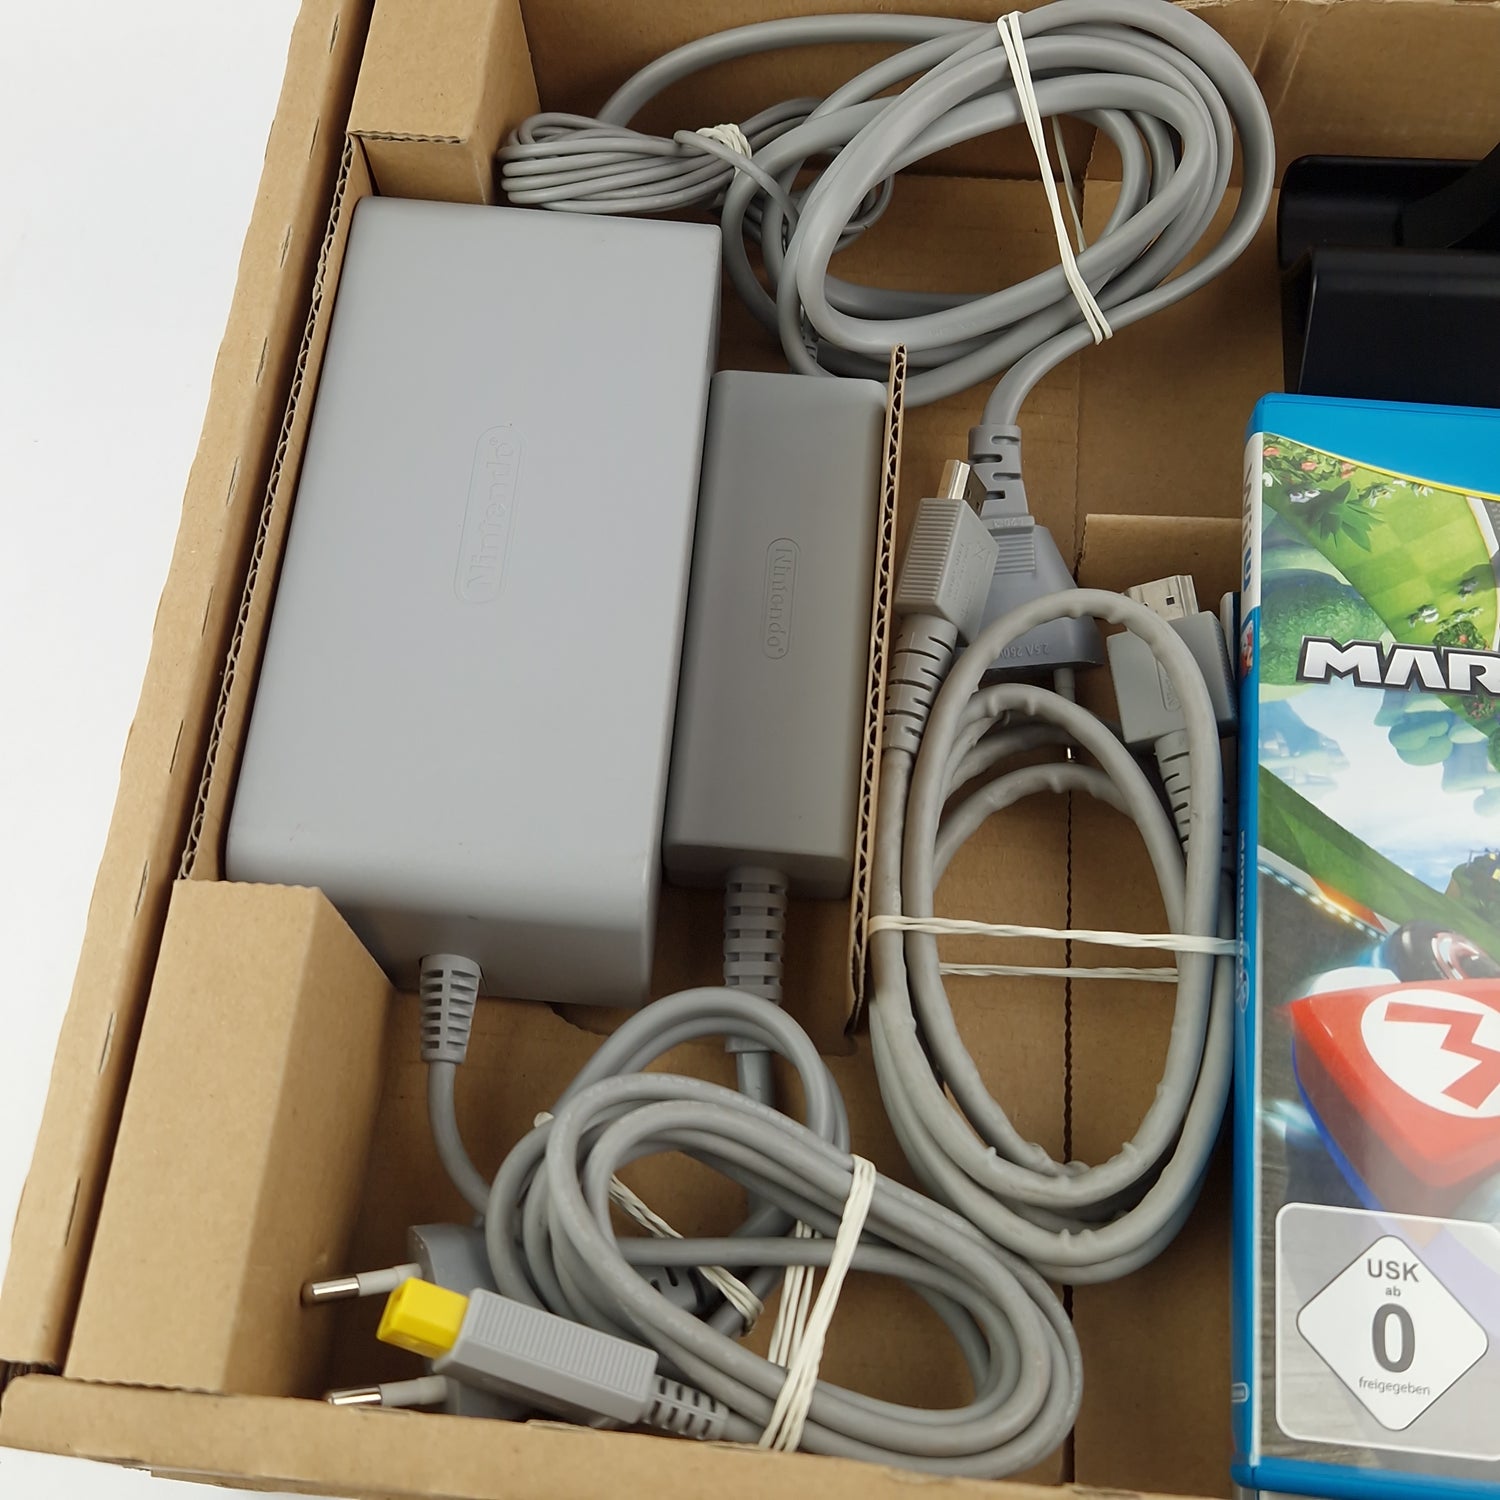 Nintendo Wii U Konsole : Mario Kart 8 Premium Pack 32gb - OVP Pal Console